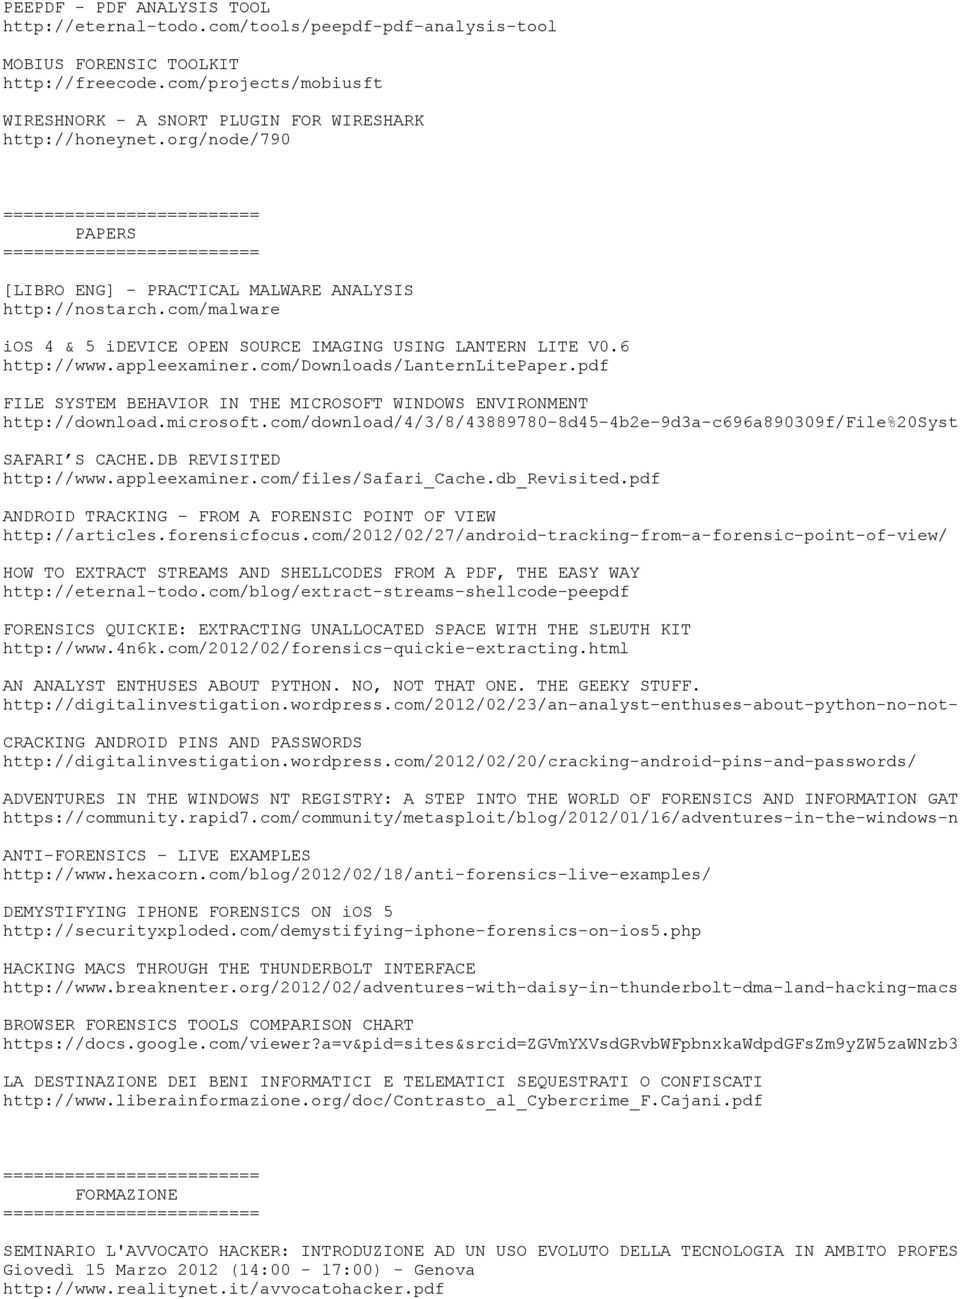 com/malware ios 4 & 5 idevice OPEN SOURCE IMAGING USING LANTERN LITE V0.6 http://www.appleexaminer.com/downloads/lanternlitepaper.